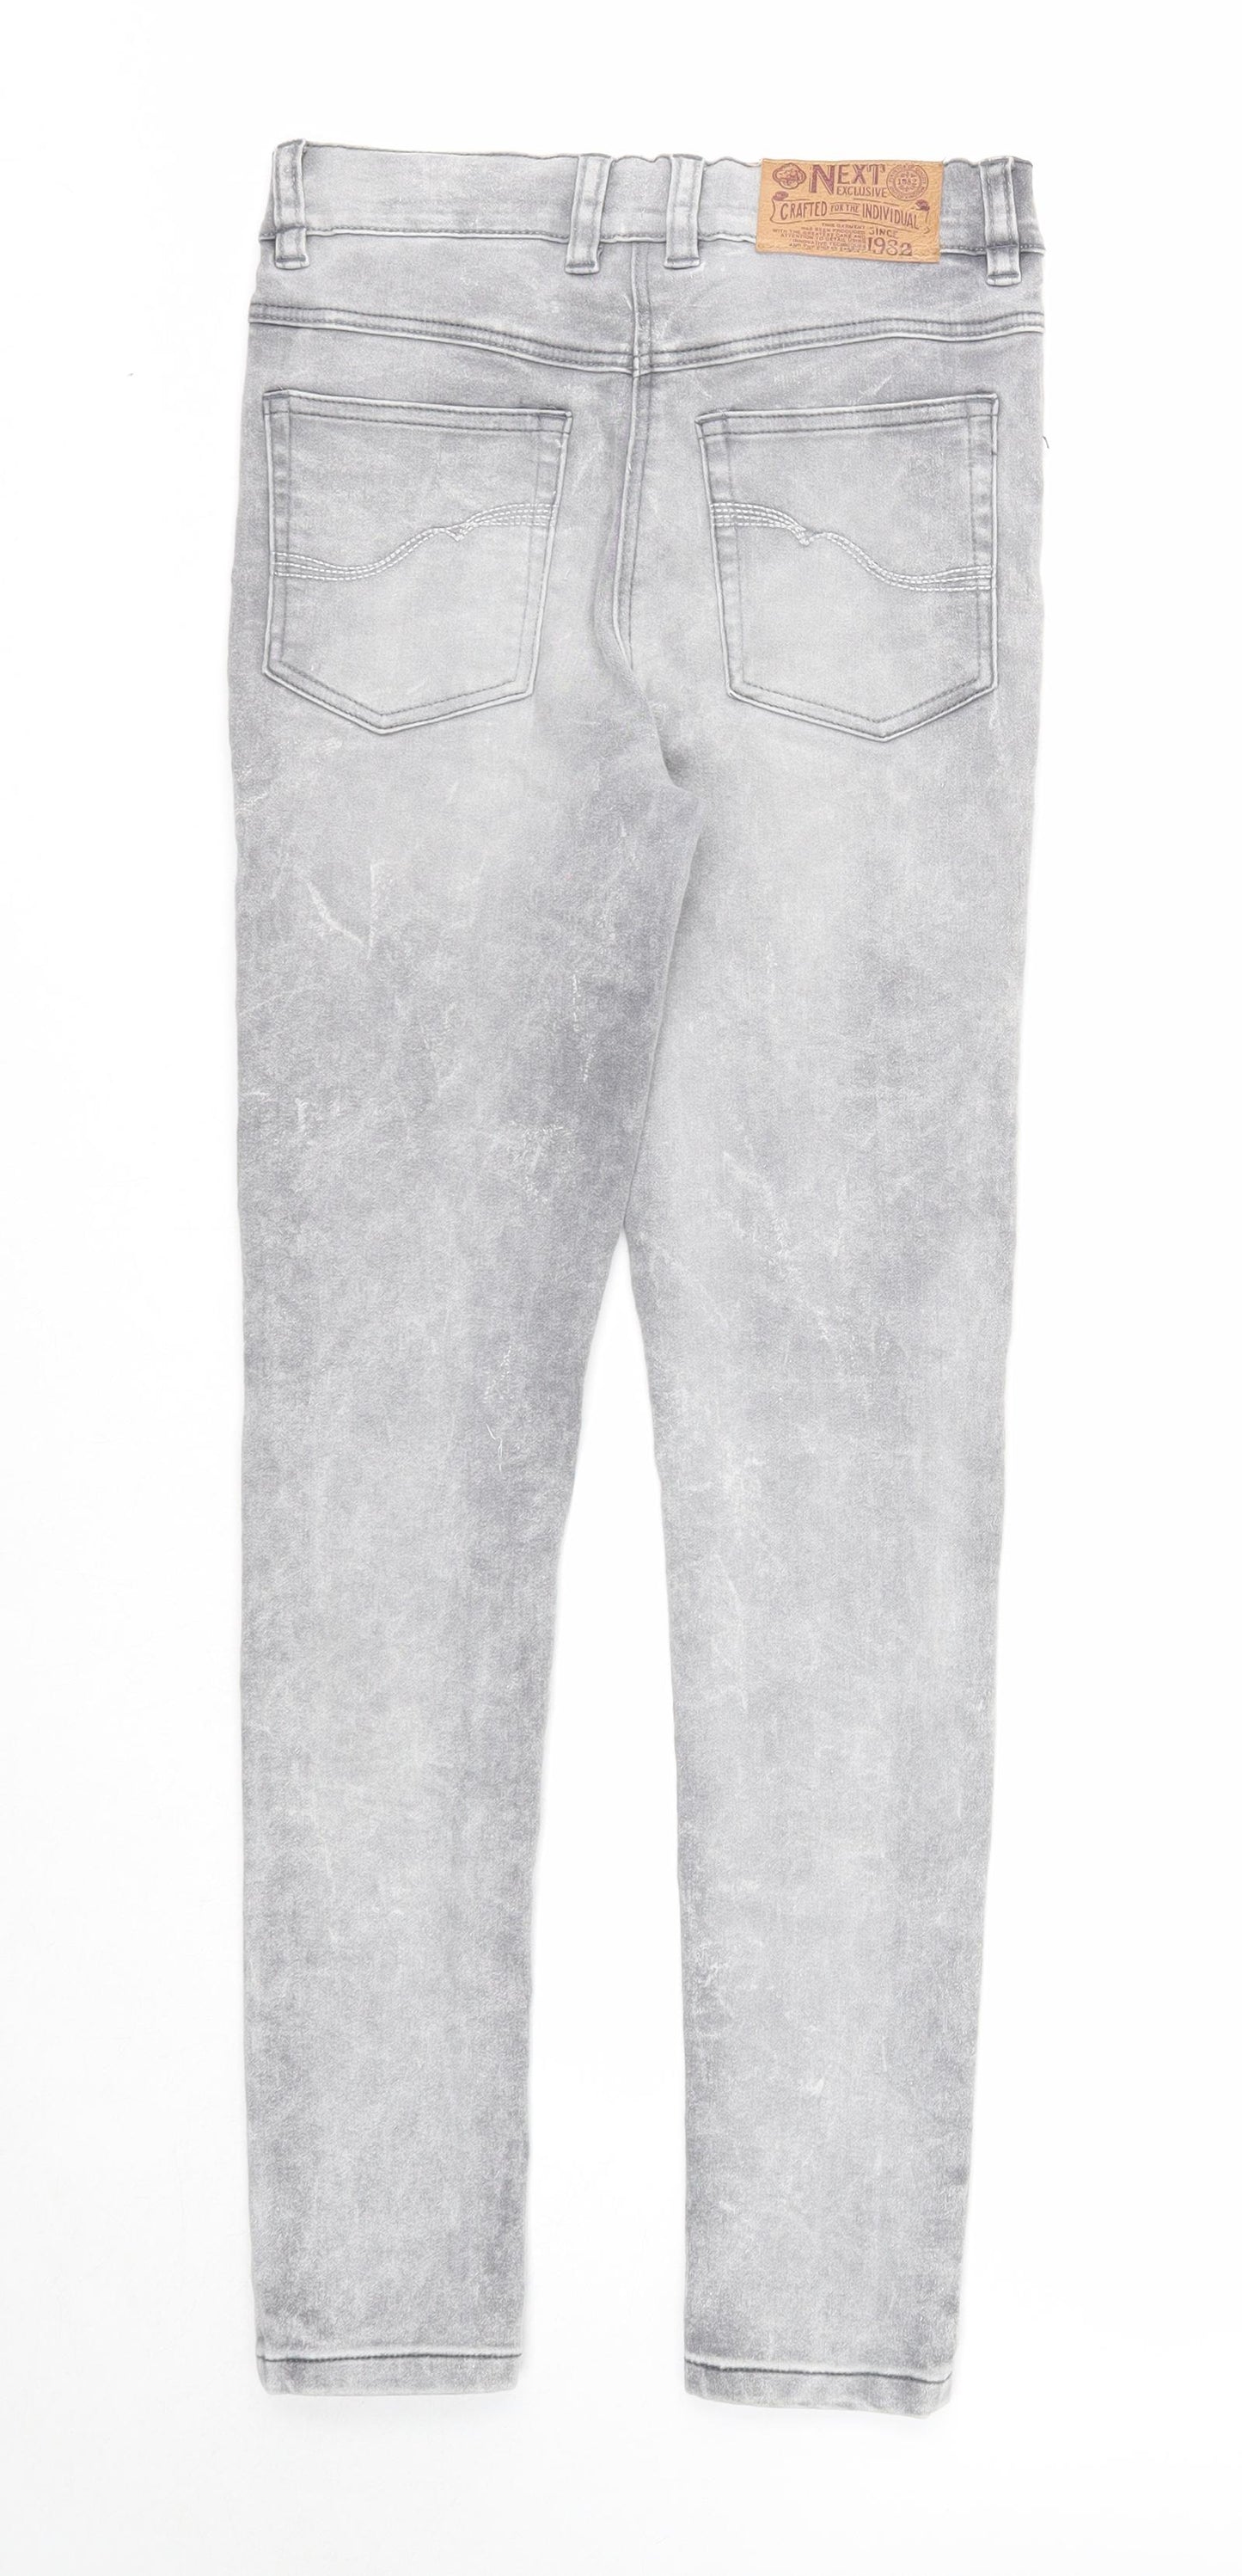 NEXT Boys Grey Cotton Skinny Jeans Size 12 Years Regular Zip